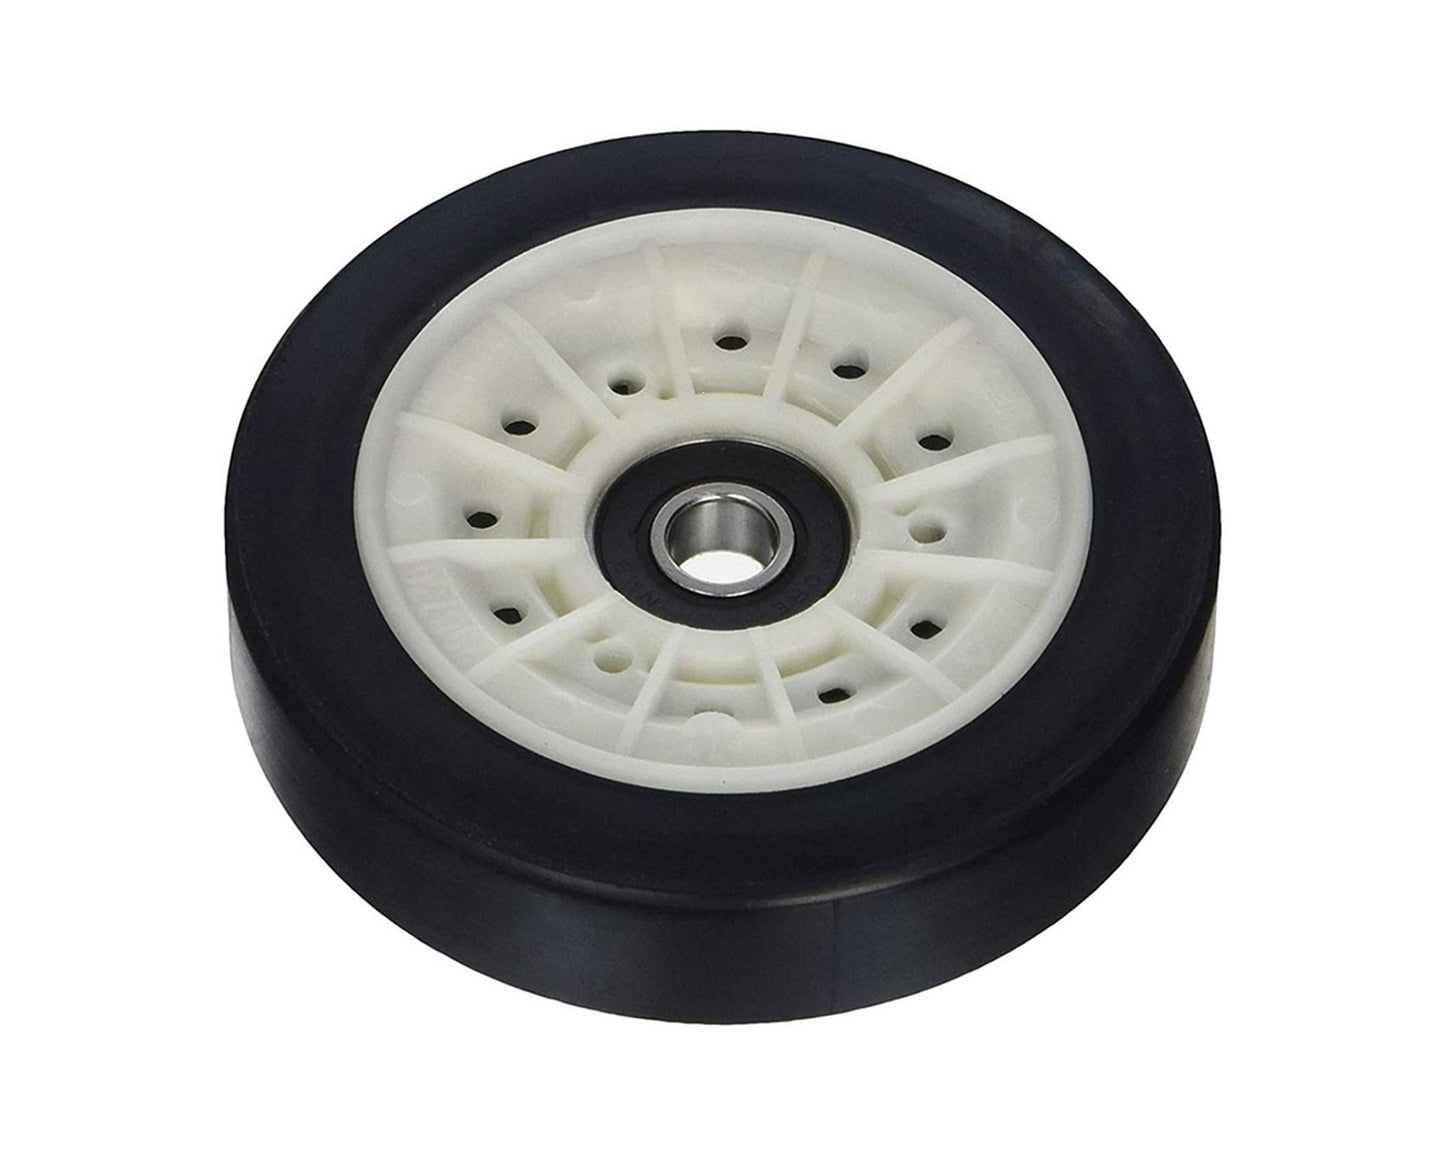 Tumble Dryer Drum Wheel Roller for Beko DCU7230B, DCU7230S, DCU7230W, DCUR701W